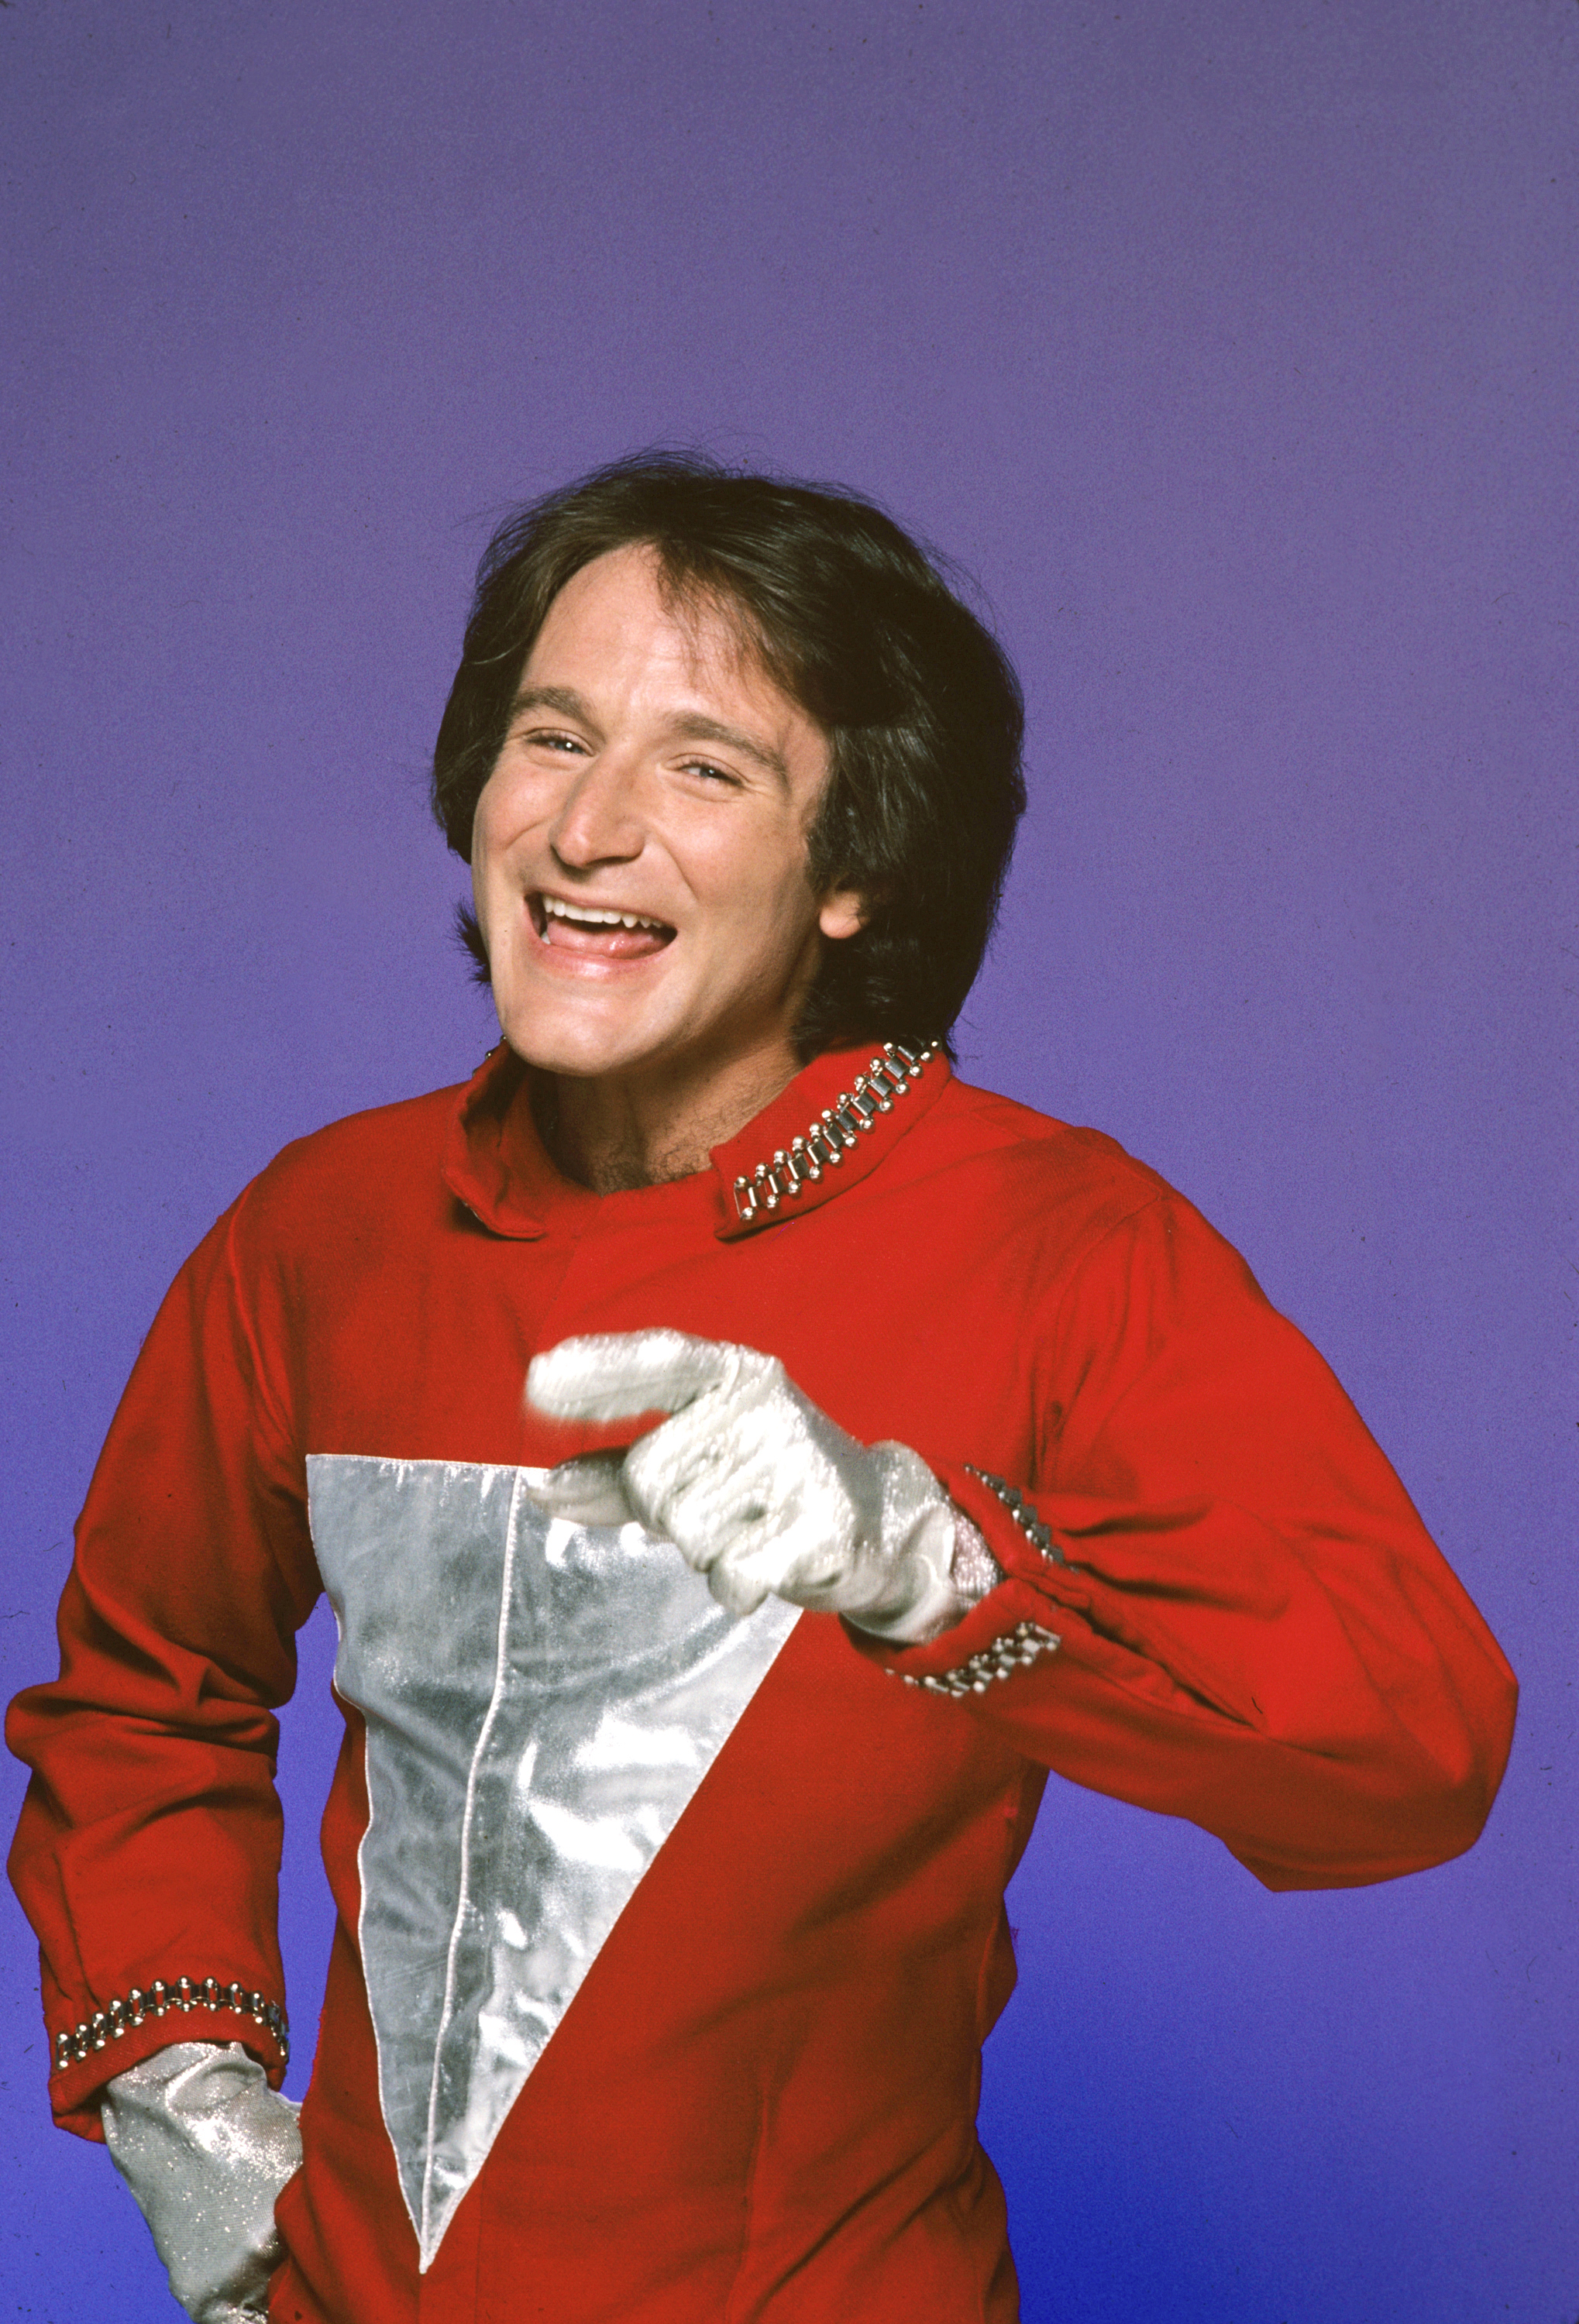 Robin Williams dans "Mork and Mindy" en 1978 | Source : Getty Images